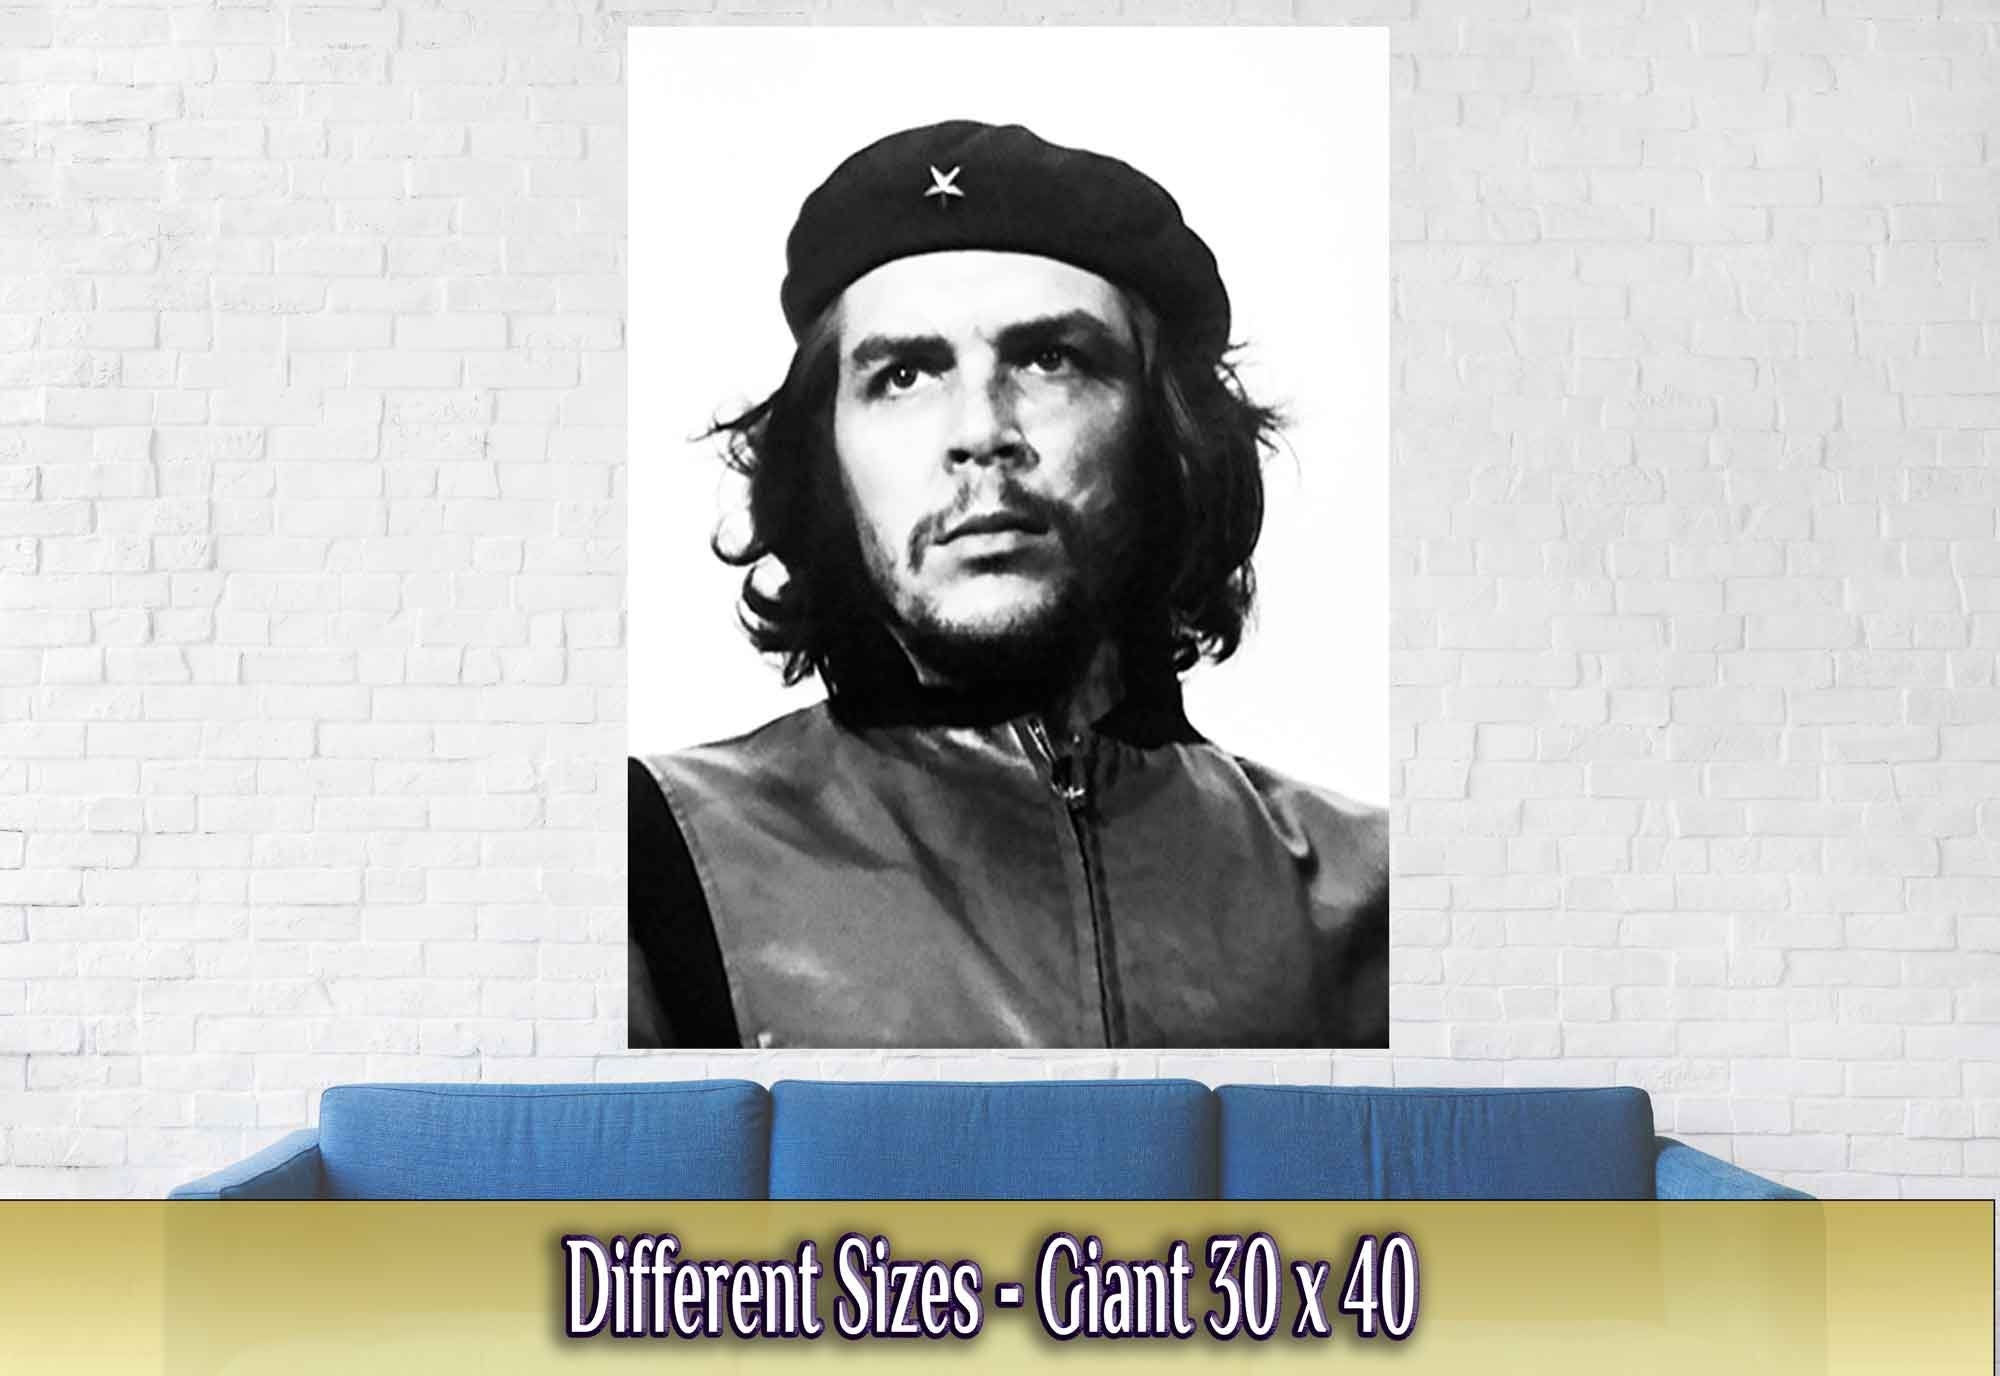 Che Guevara Poster, Famous Photo Print From 1960, Vintage Wall Art - Guerillero Heroico - Cuban Revolutionary - WallArtPrints4U